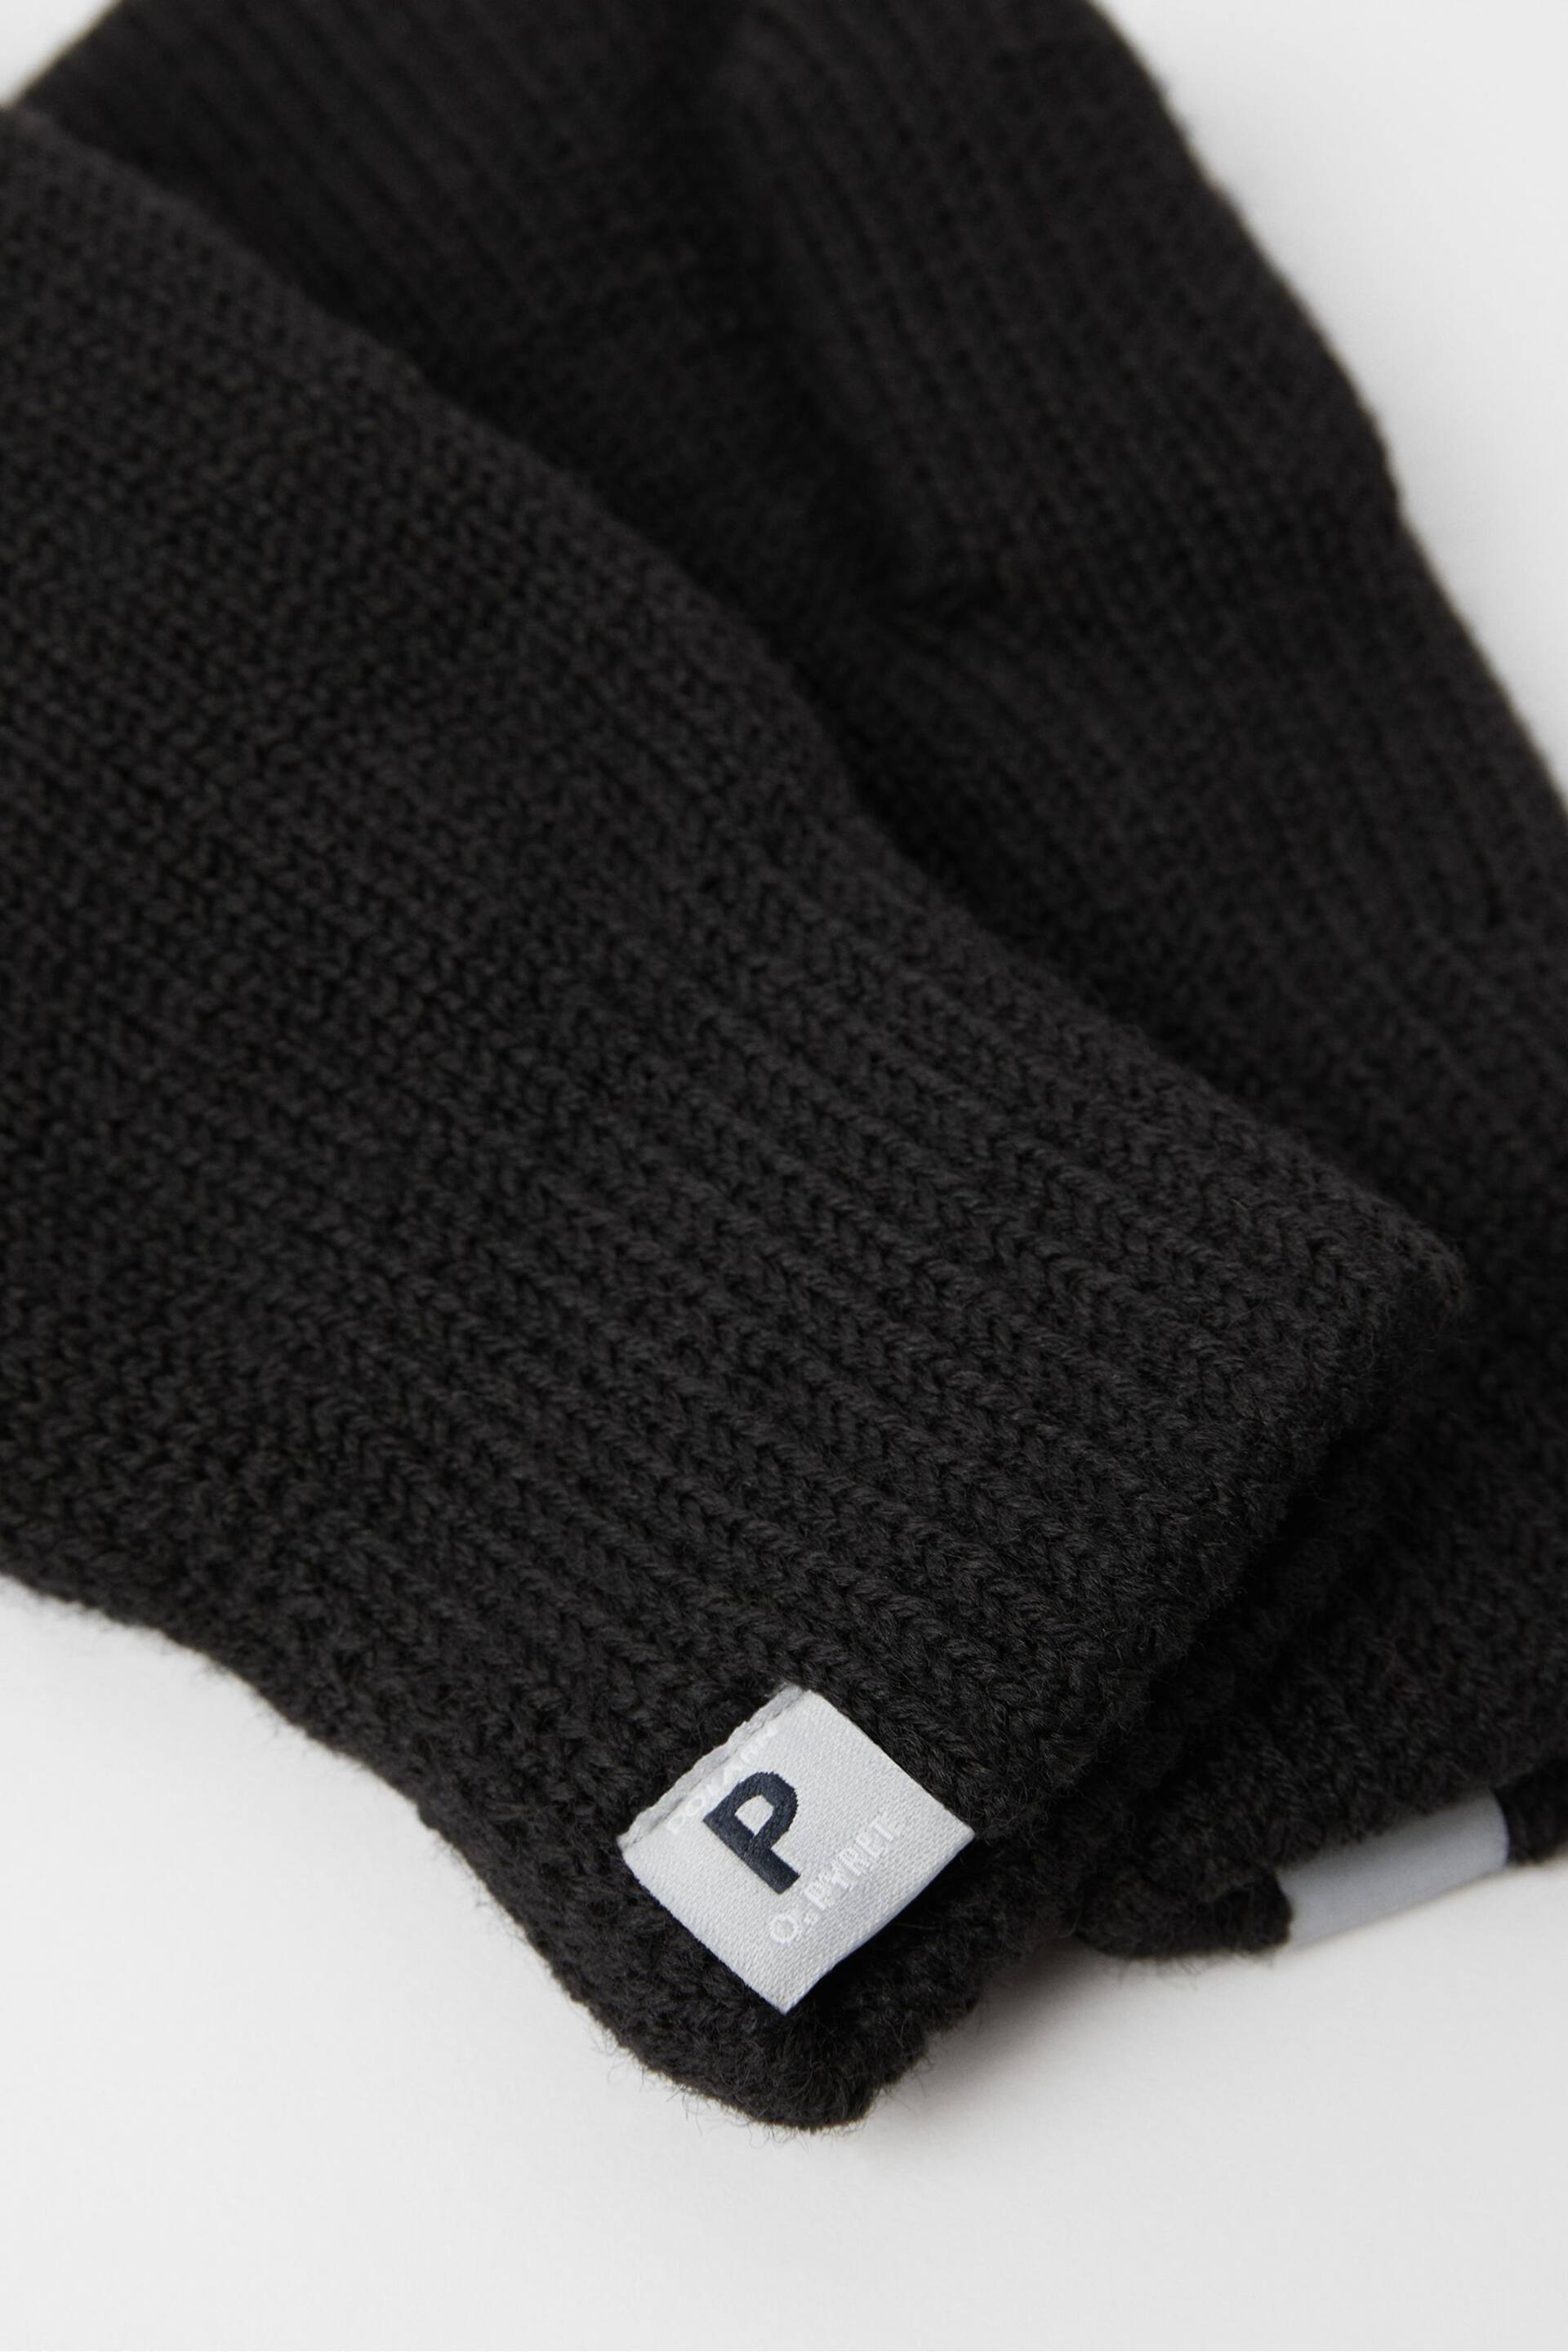 Polarn O Pyret Wool Black Mittens - Image 1 of 1